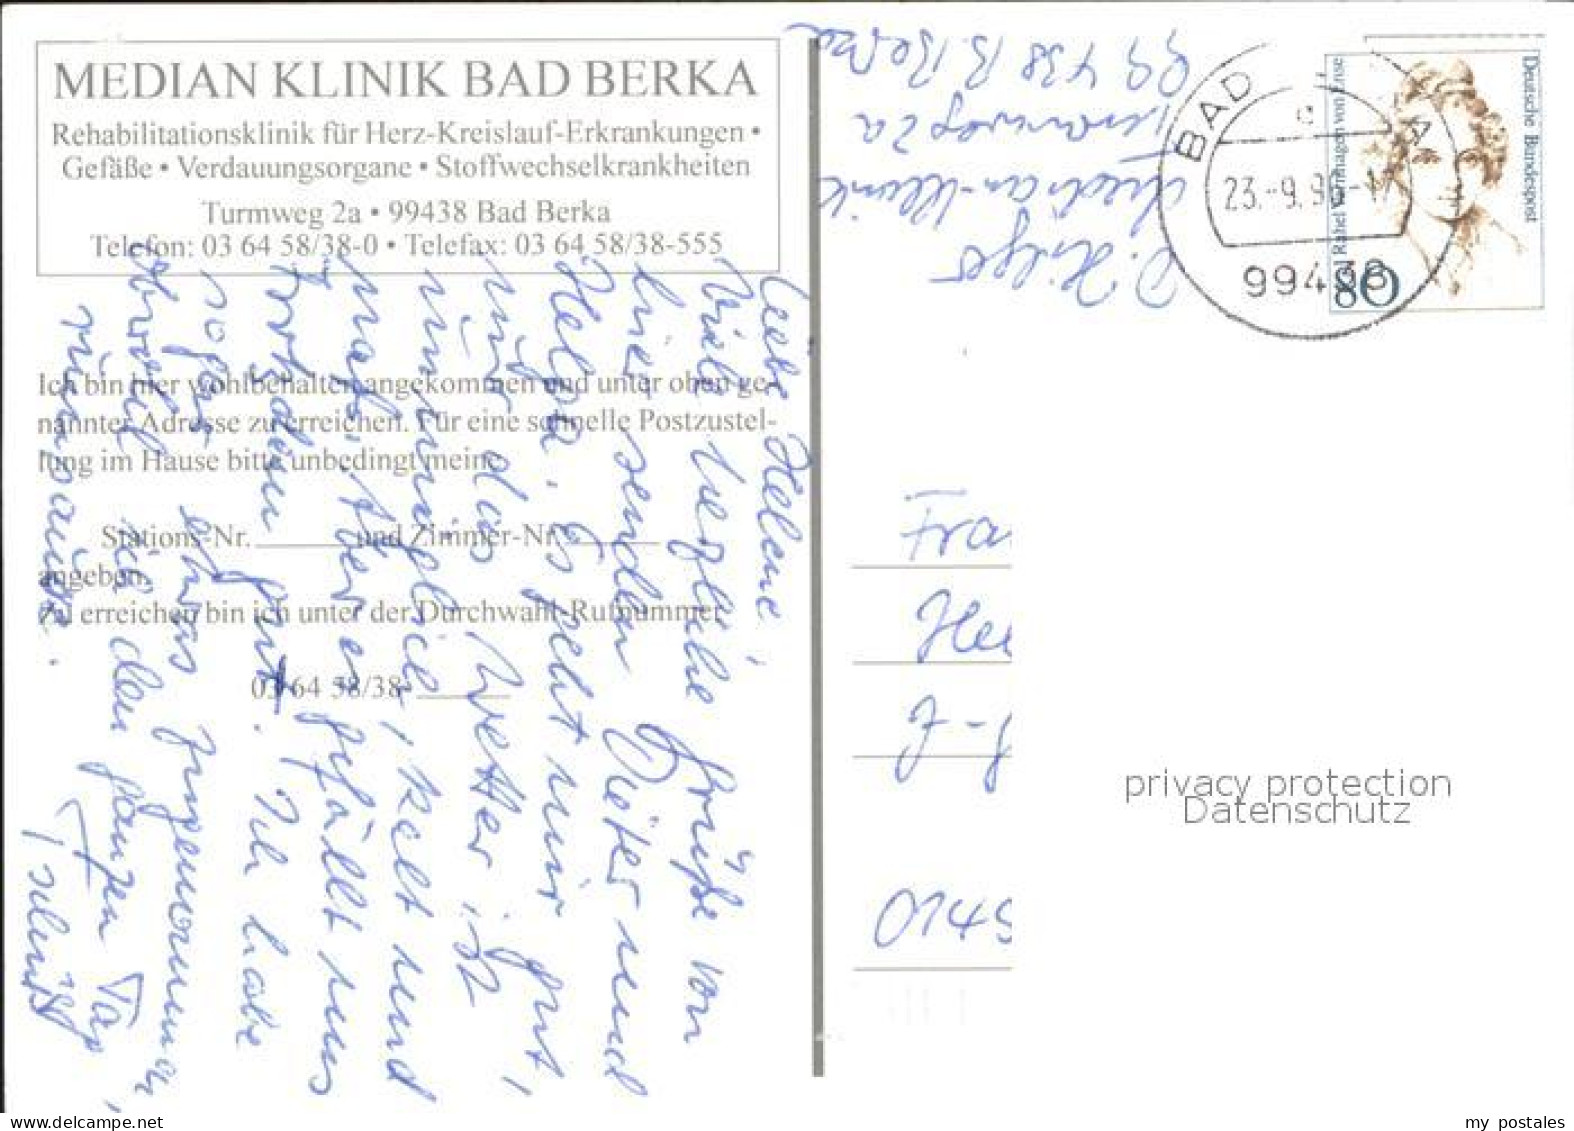 72303229 Bad Berka Median Klinik  Bad Berka - Bad Berka